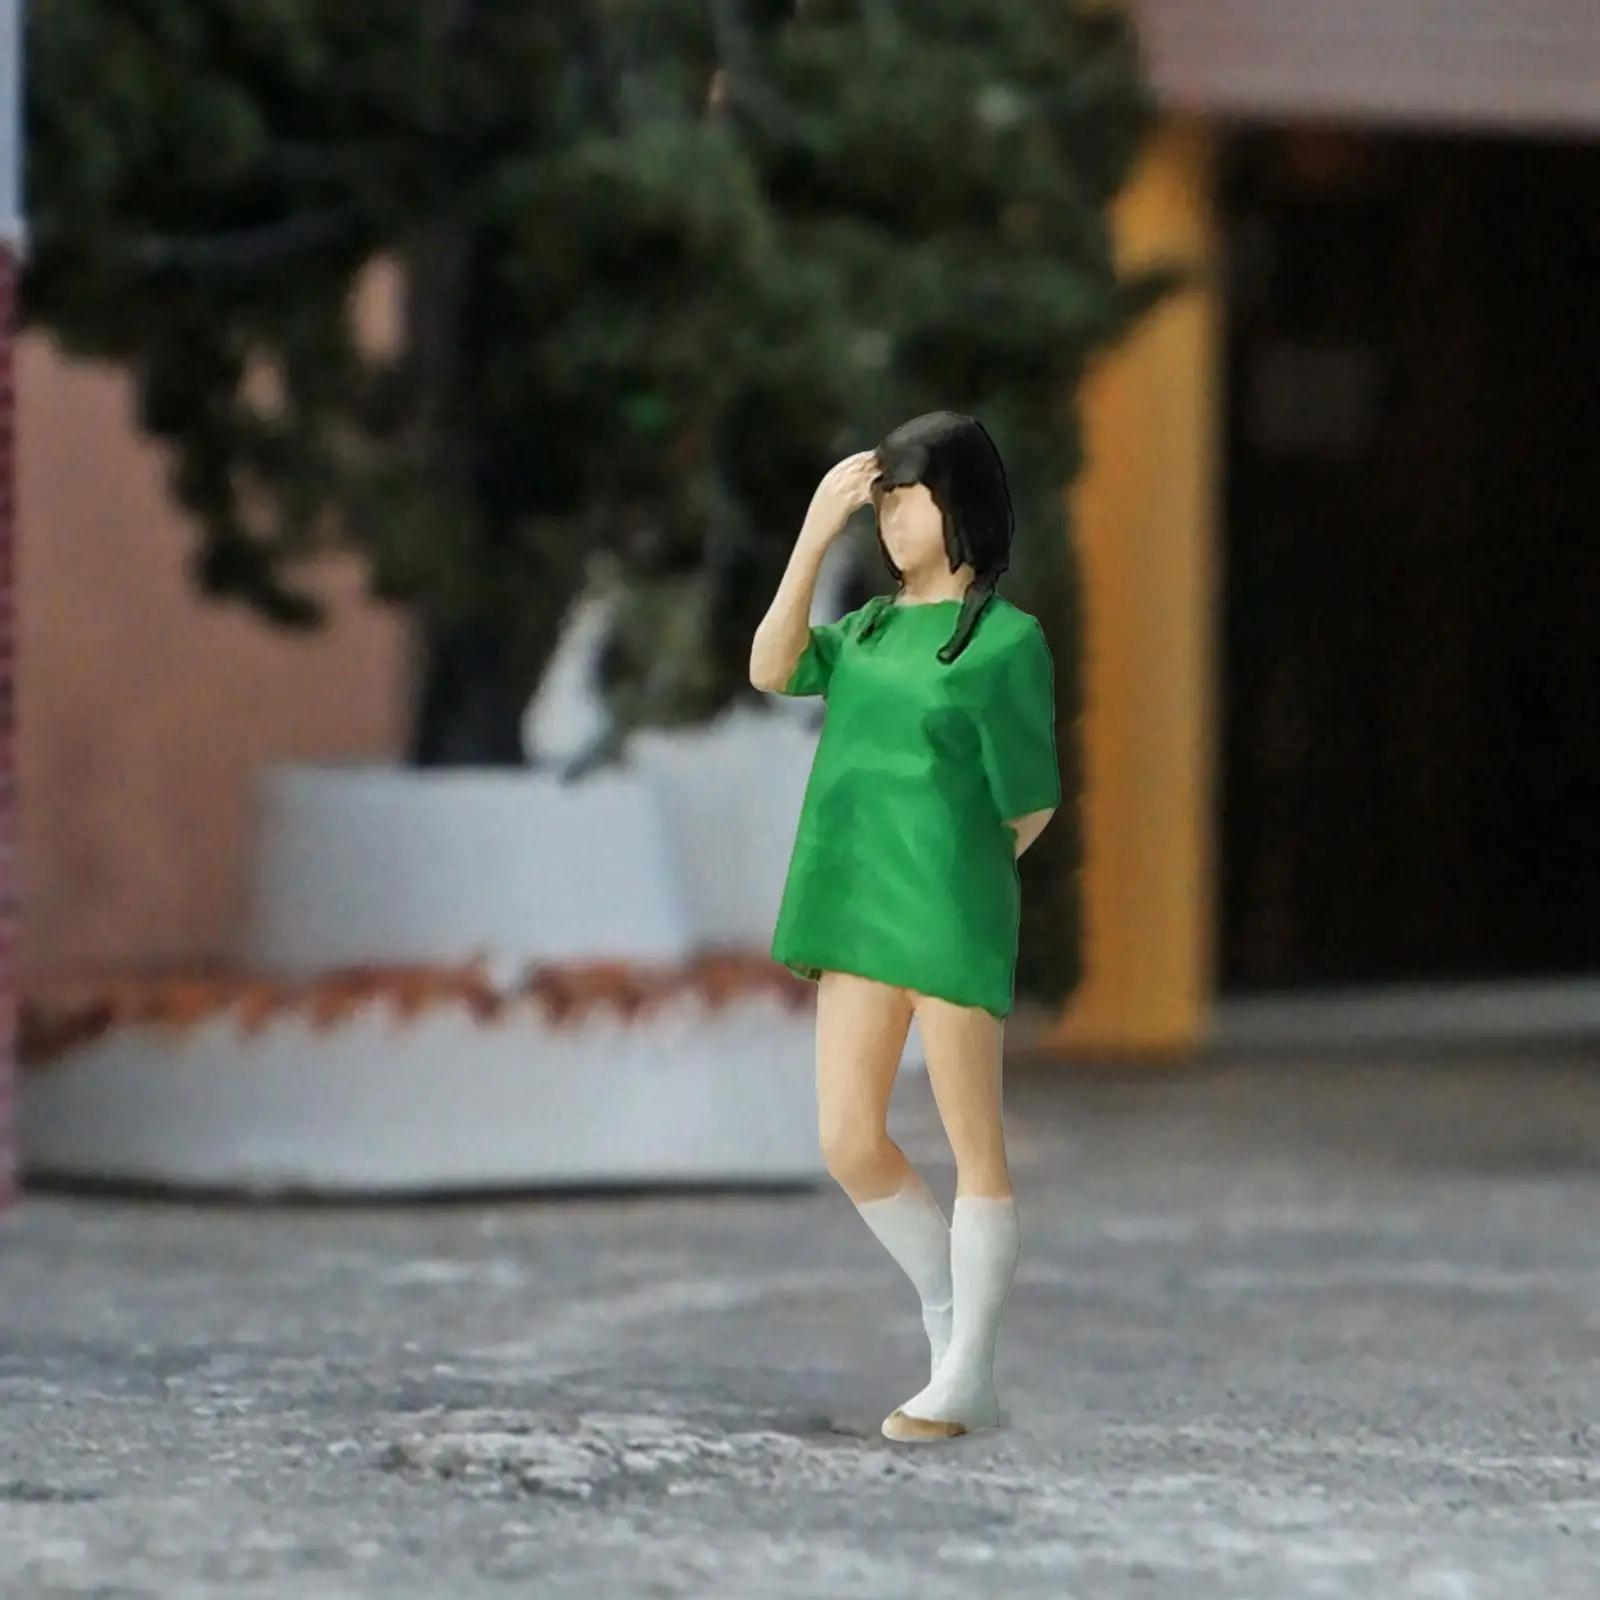 1:64 People Figures Trains Architectural People Figures Miniature People Figurines for Dollhouse Miniature Scene Accessories